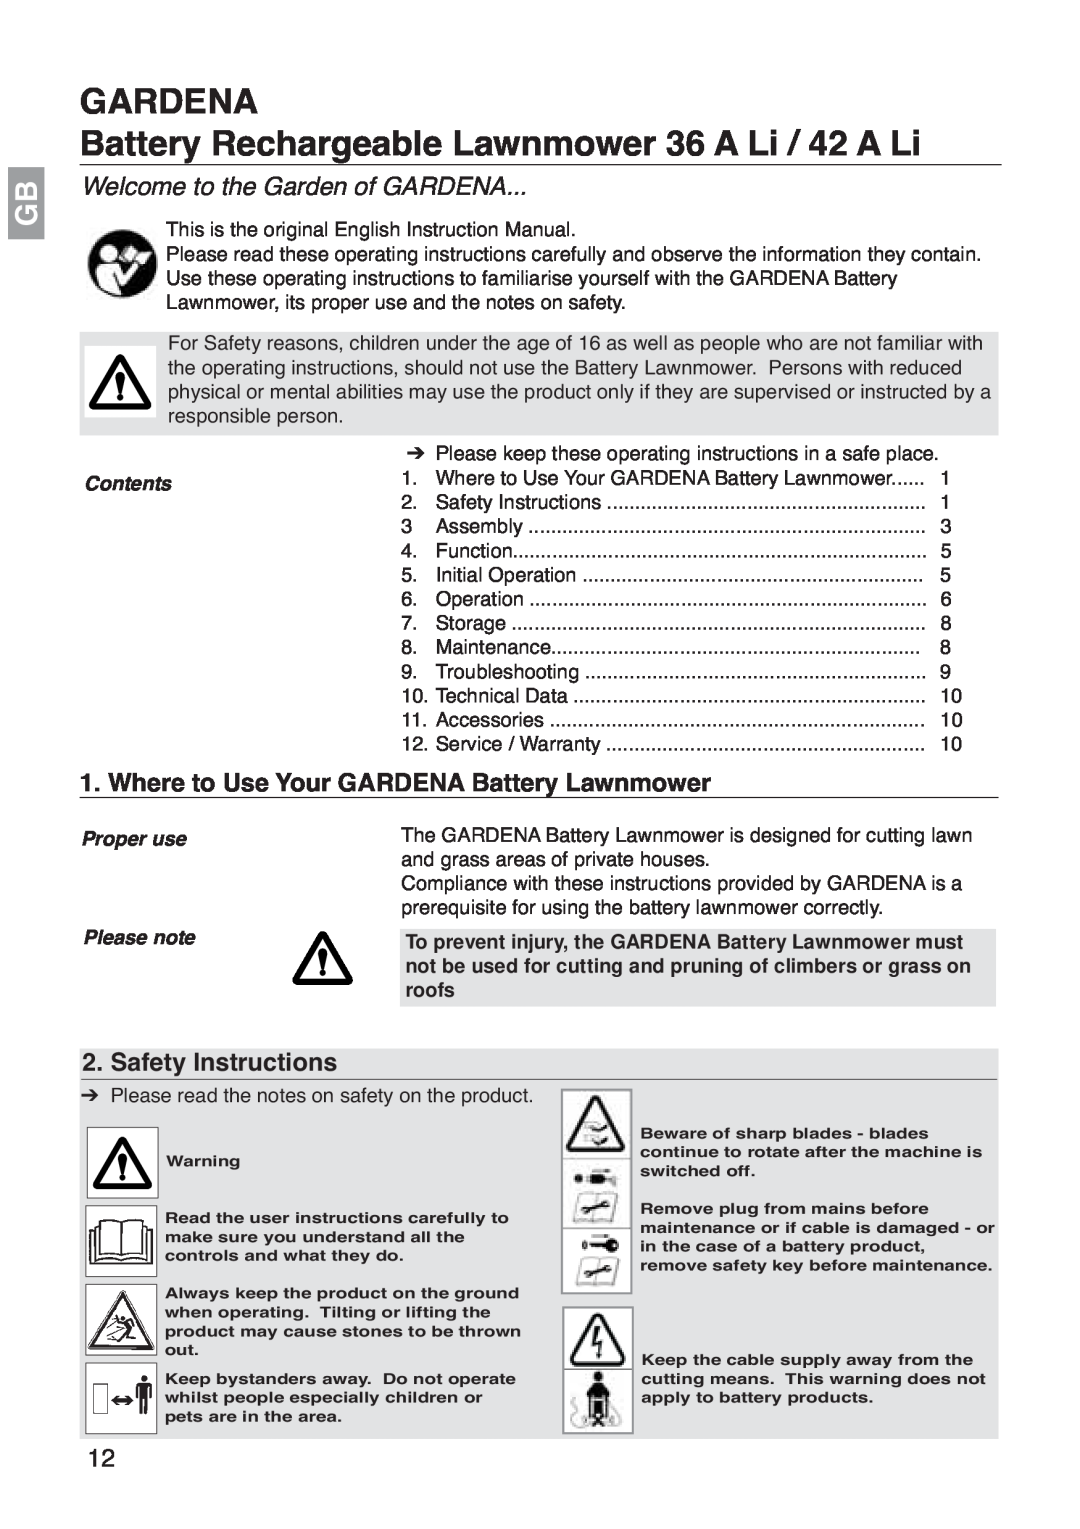 Gardena 42 A Li, 36 A Li, Art. 4041 Where to Use Your GARDENA Battery Lawnmower, Safety Instructions, Gardena, Contents 